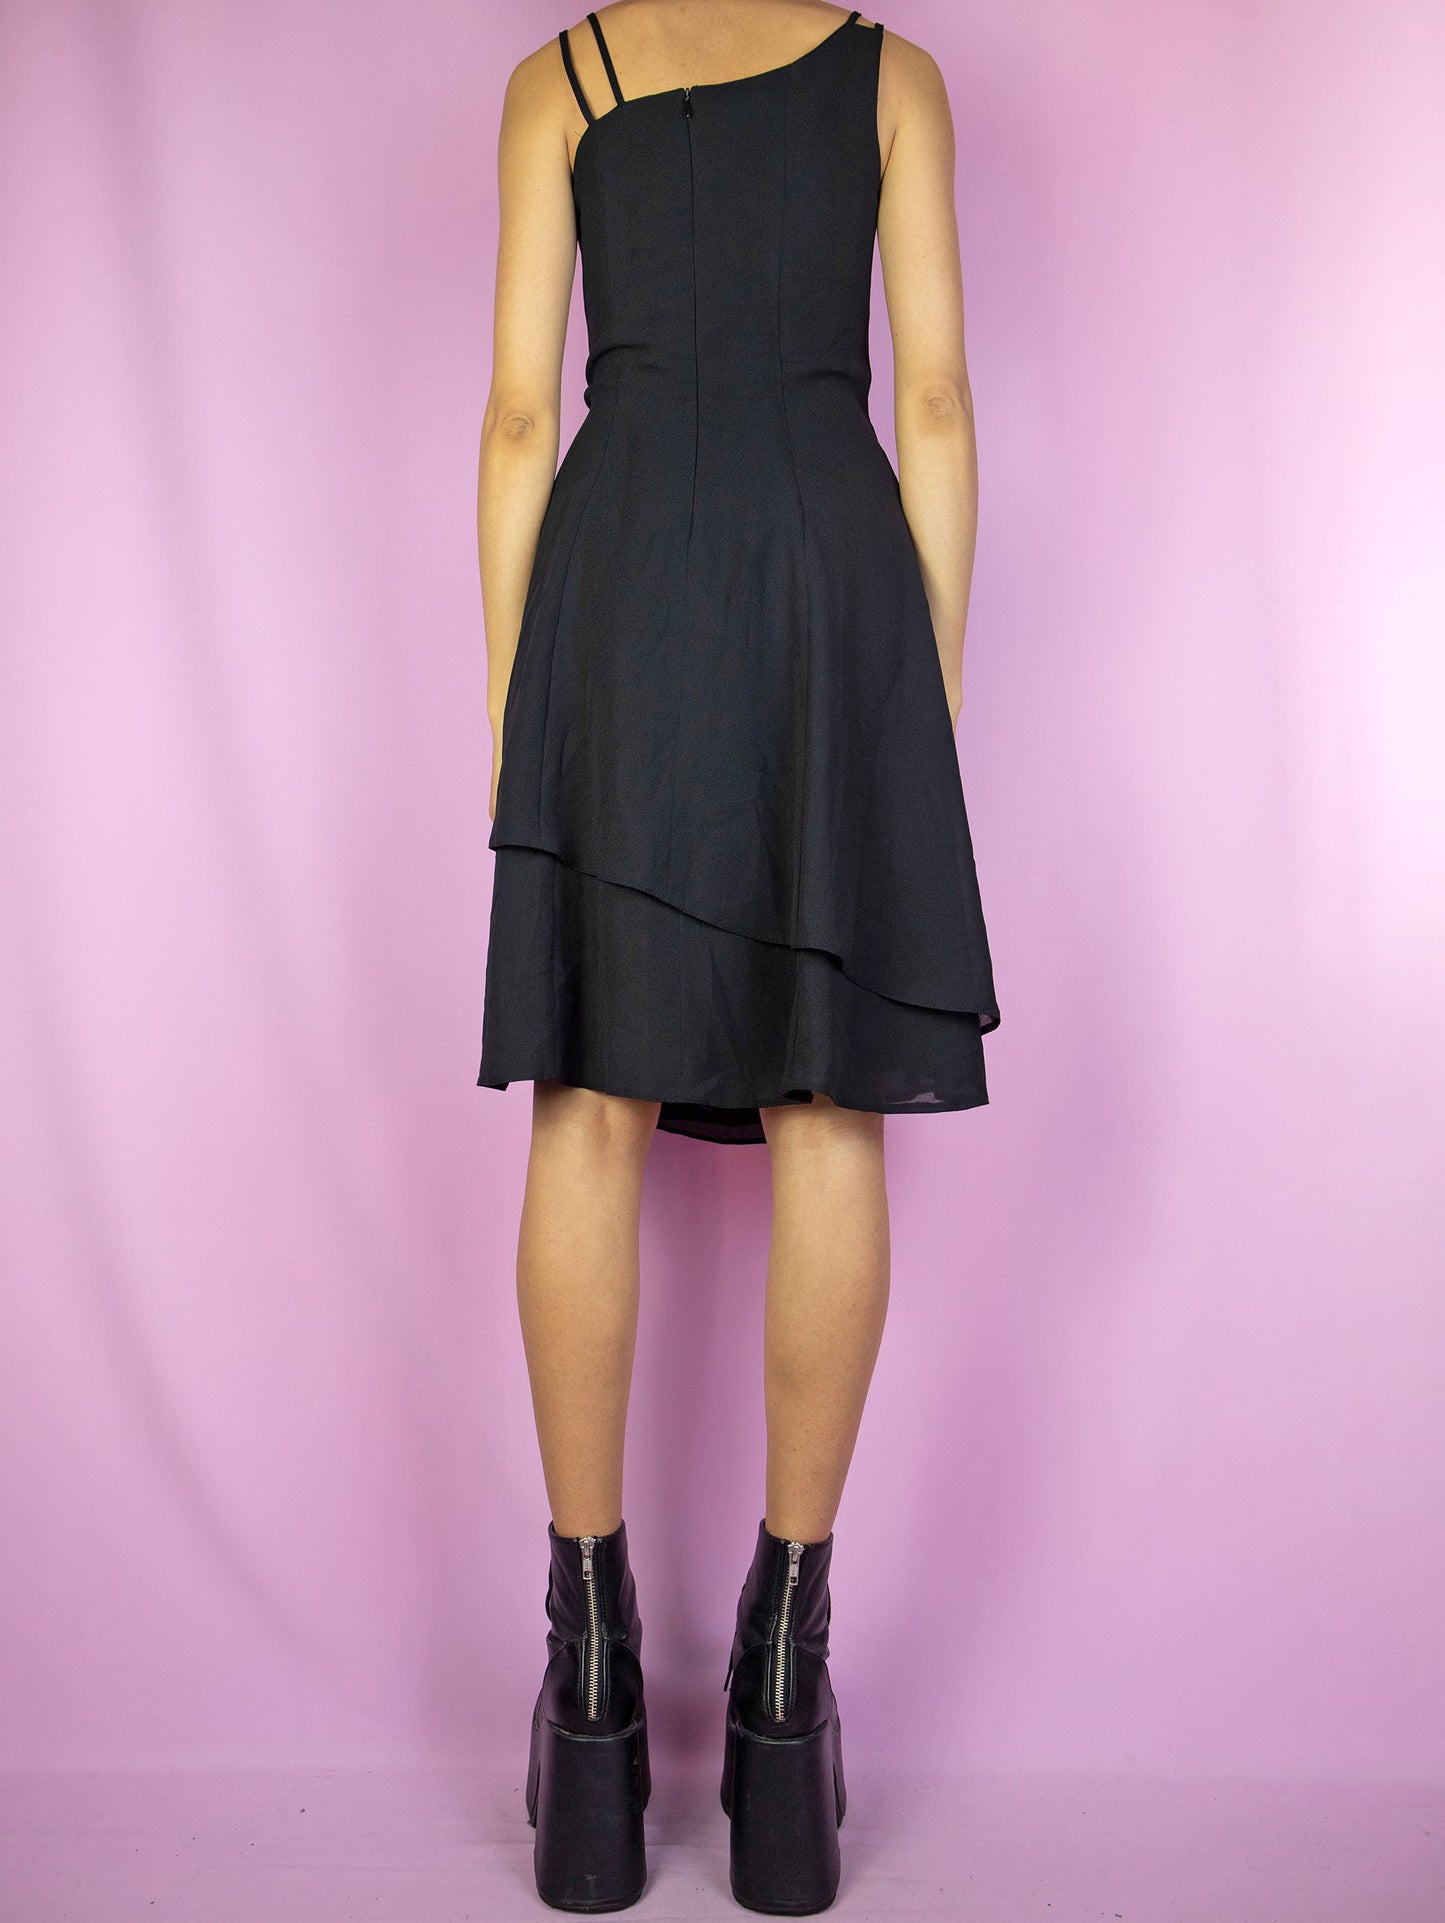 Vintage 90s Black Asymmetric Layered Dress - M